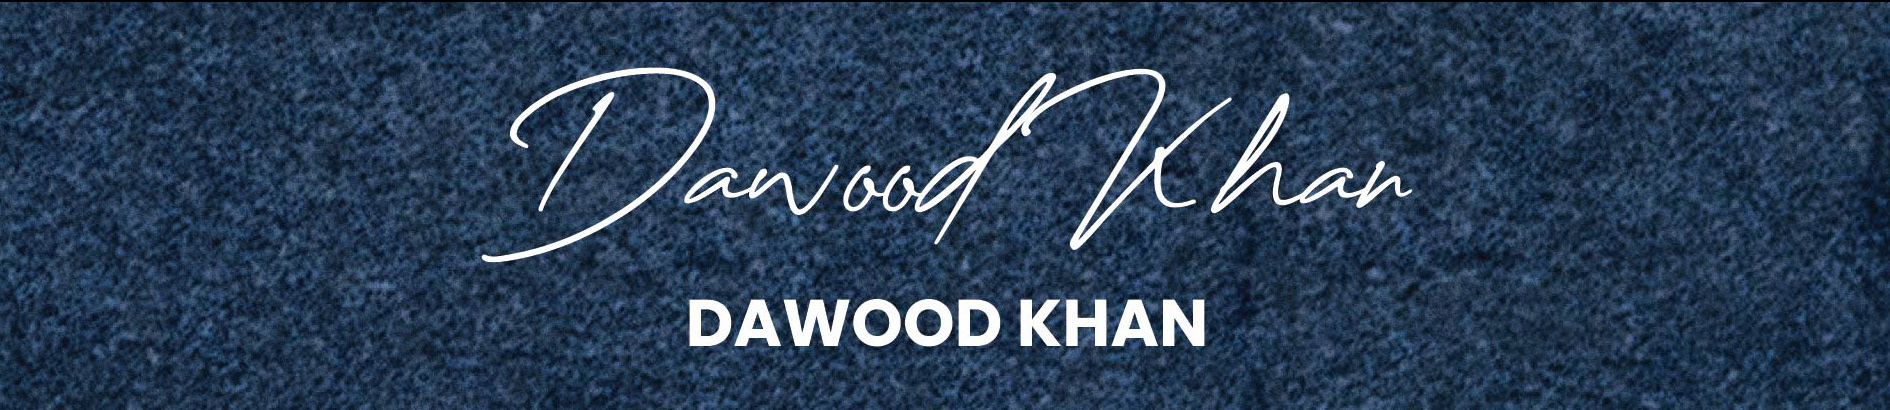 Muhammad Dawood Khan profil başlığı